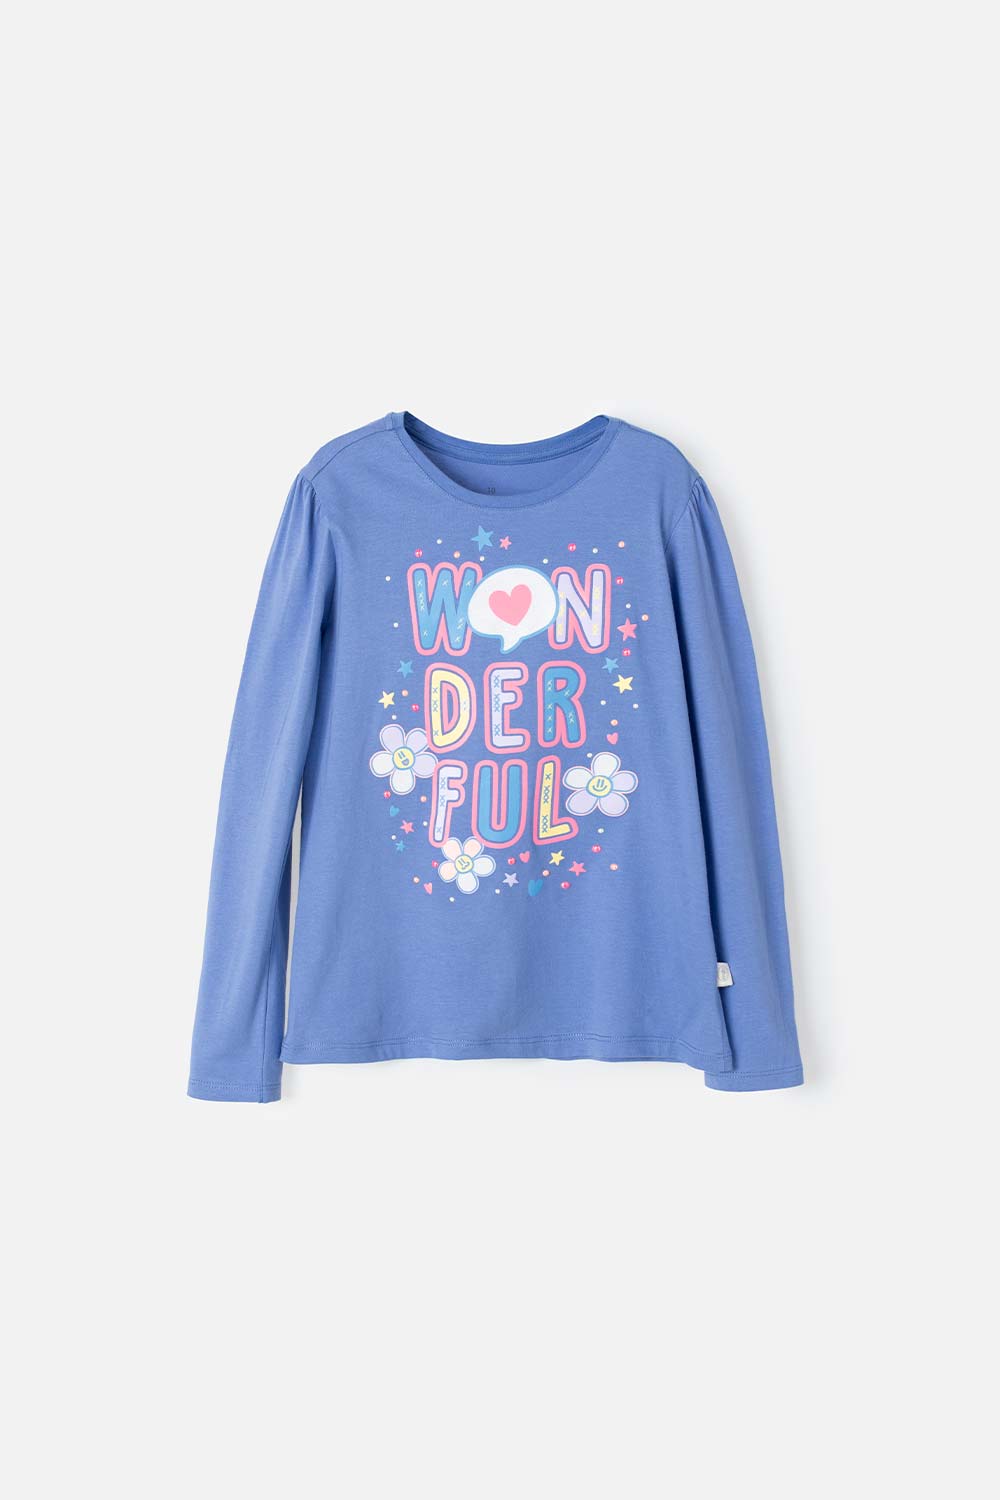 Camiseta de manga larga con mensaje azul para niña